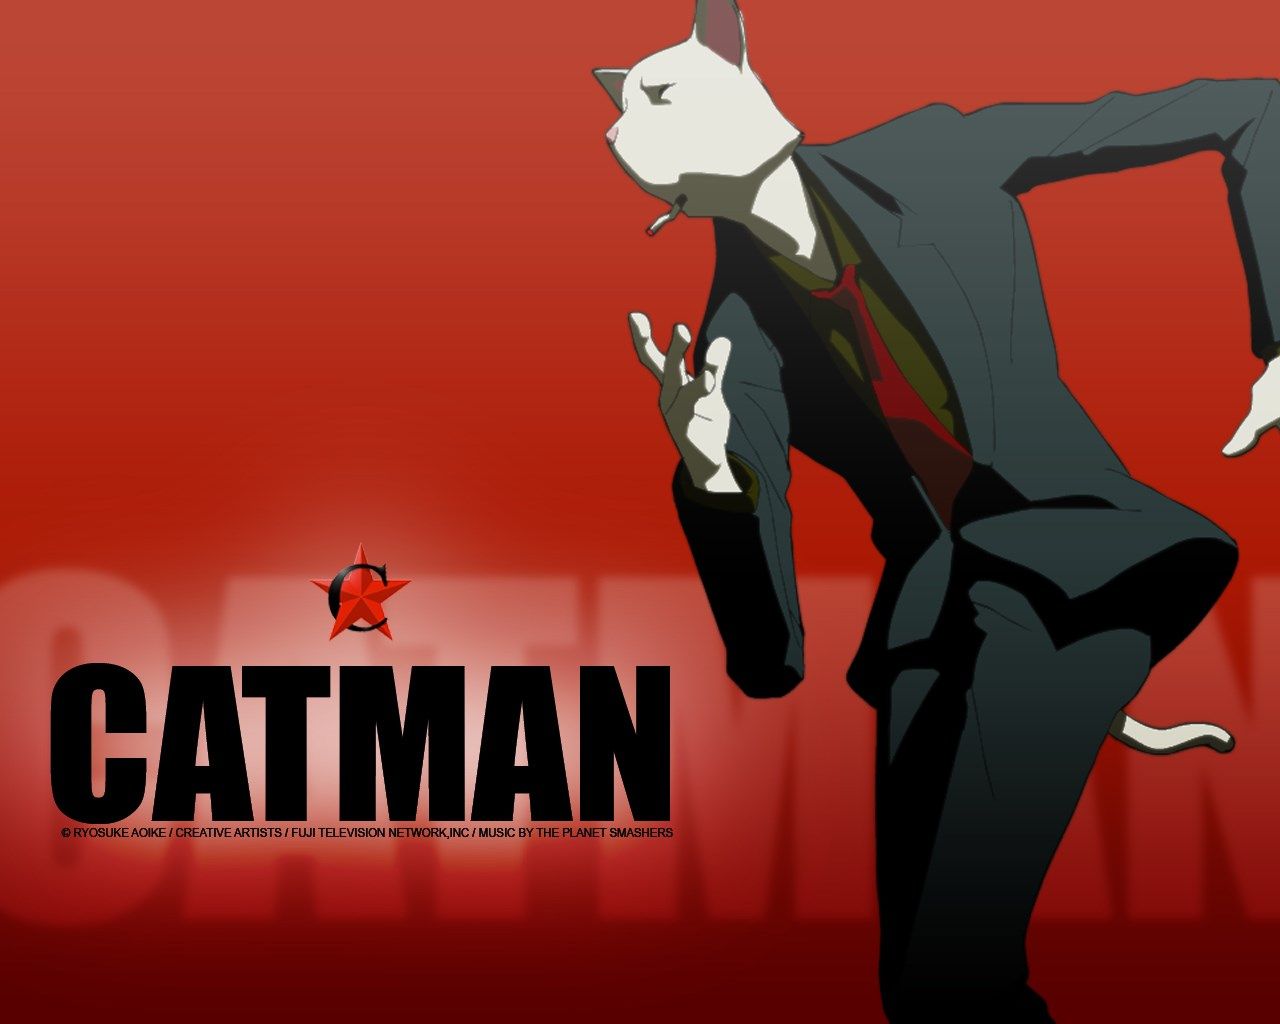 catman HD wallpaper, background